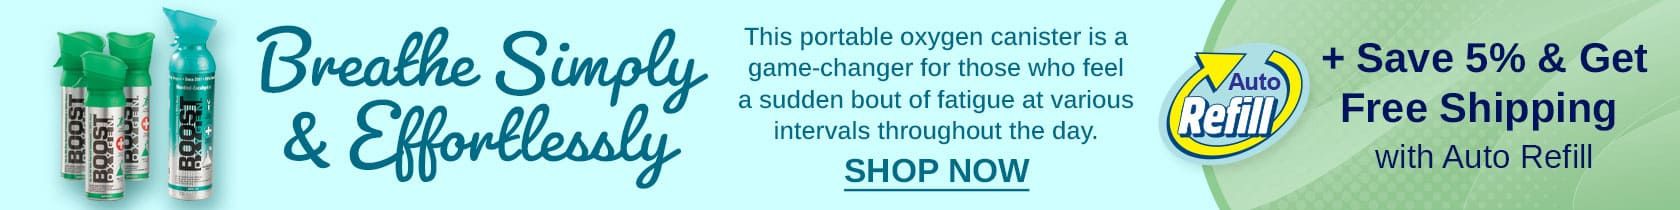 Shop Boost Oxygen